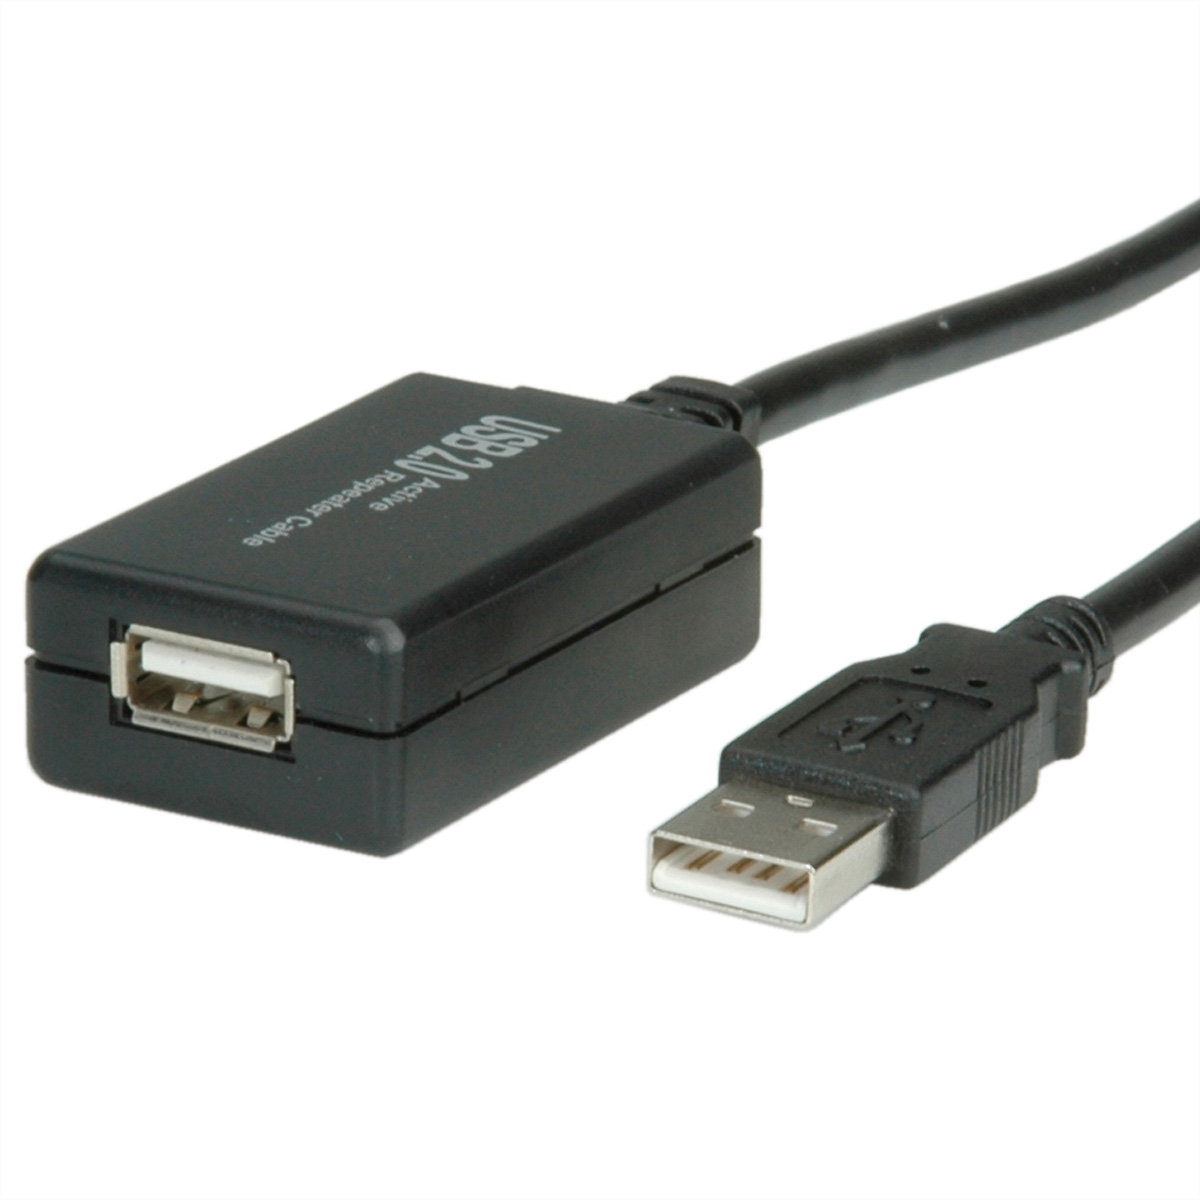 VALUE USB 2.0 VerlÃ¤ngerung, aktiv, mit Repeater, schwarz, 12 m